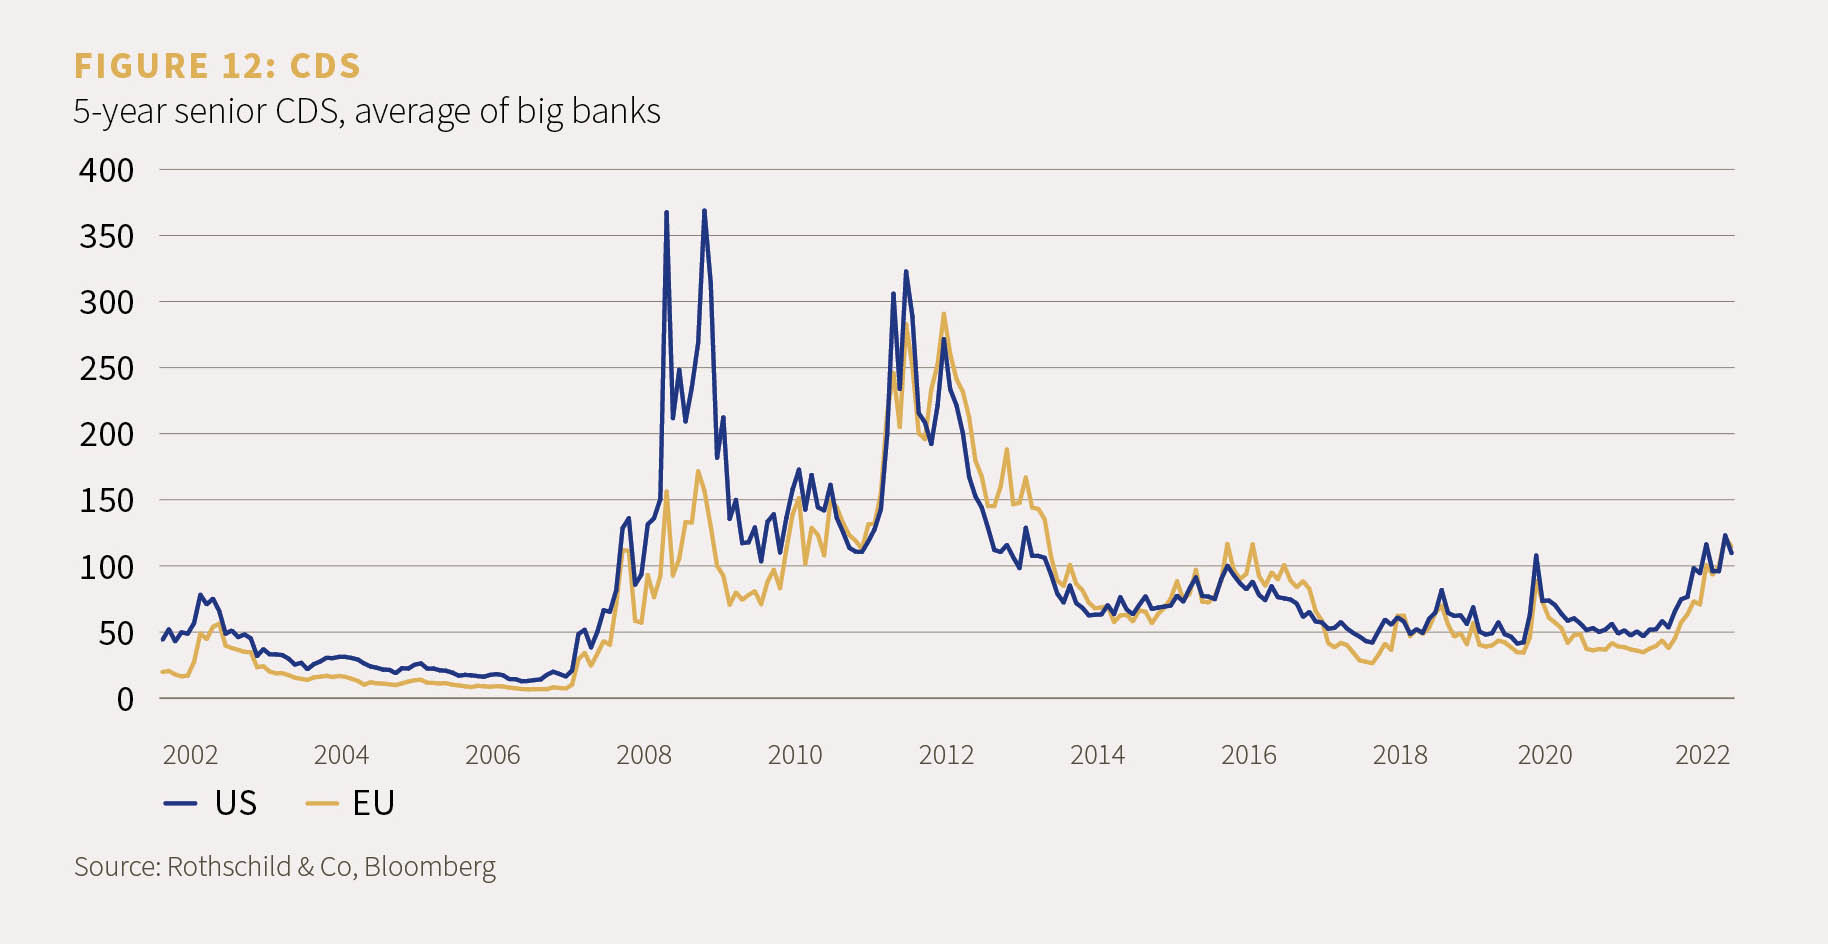 Chart 12 showing the 5 year senior CDS, average of big banks